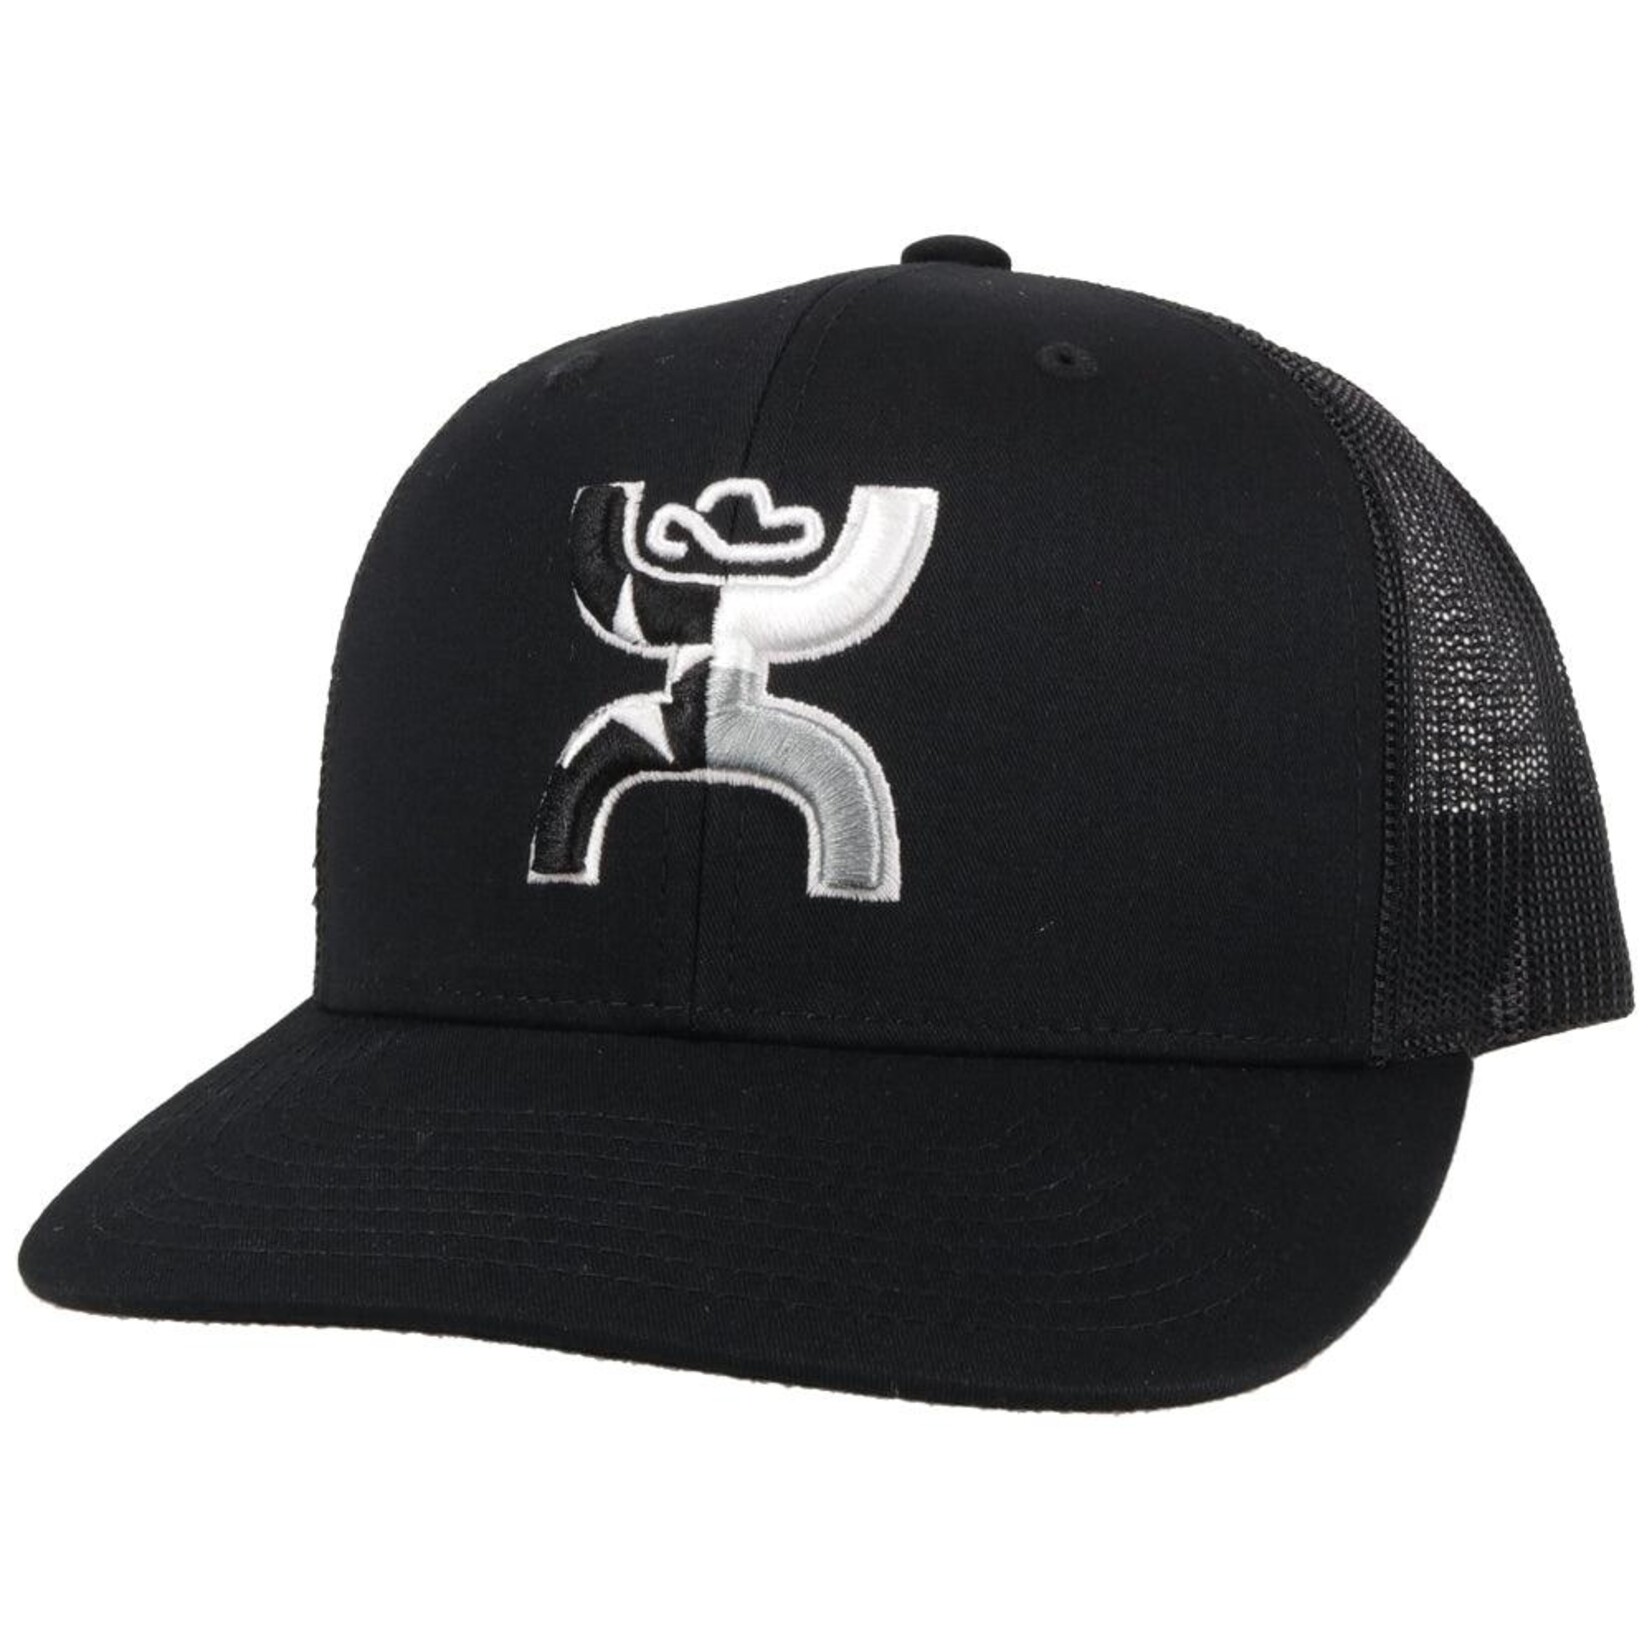 Hooey Hooey Texican Black Snapback Hat